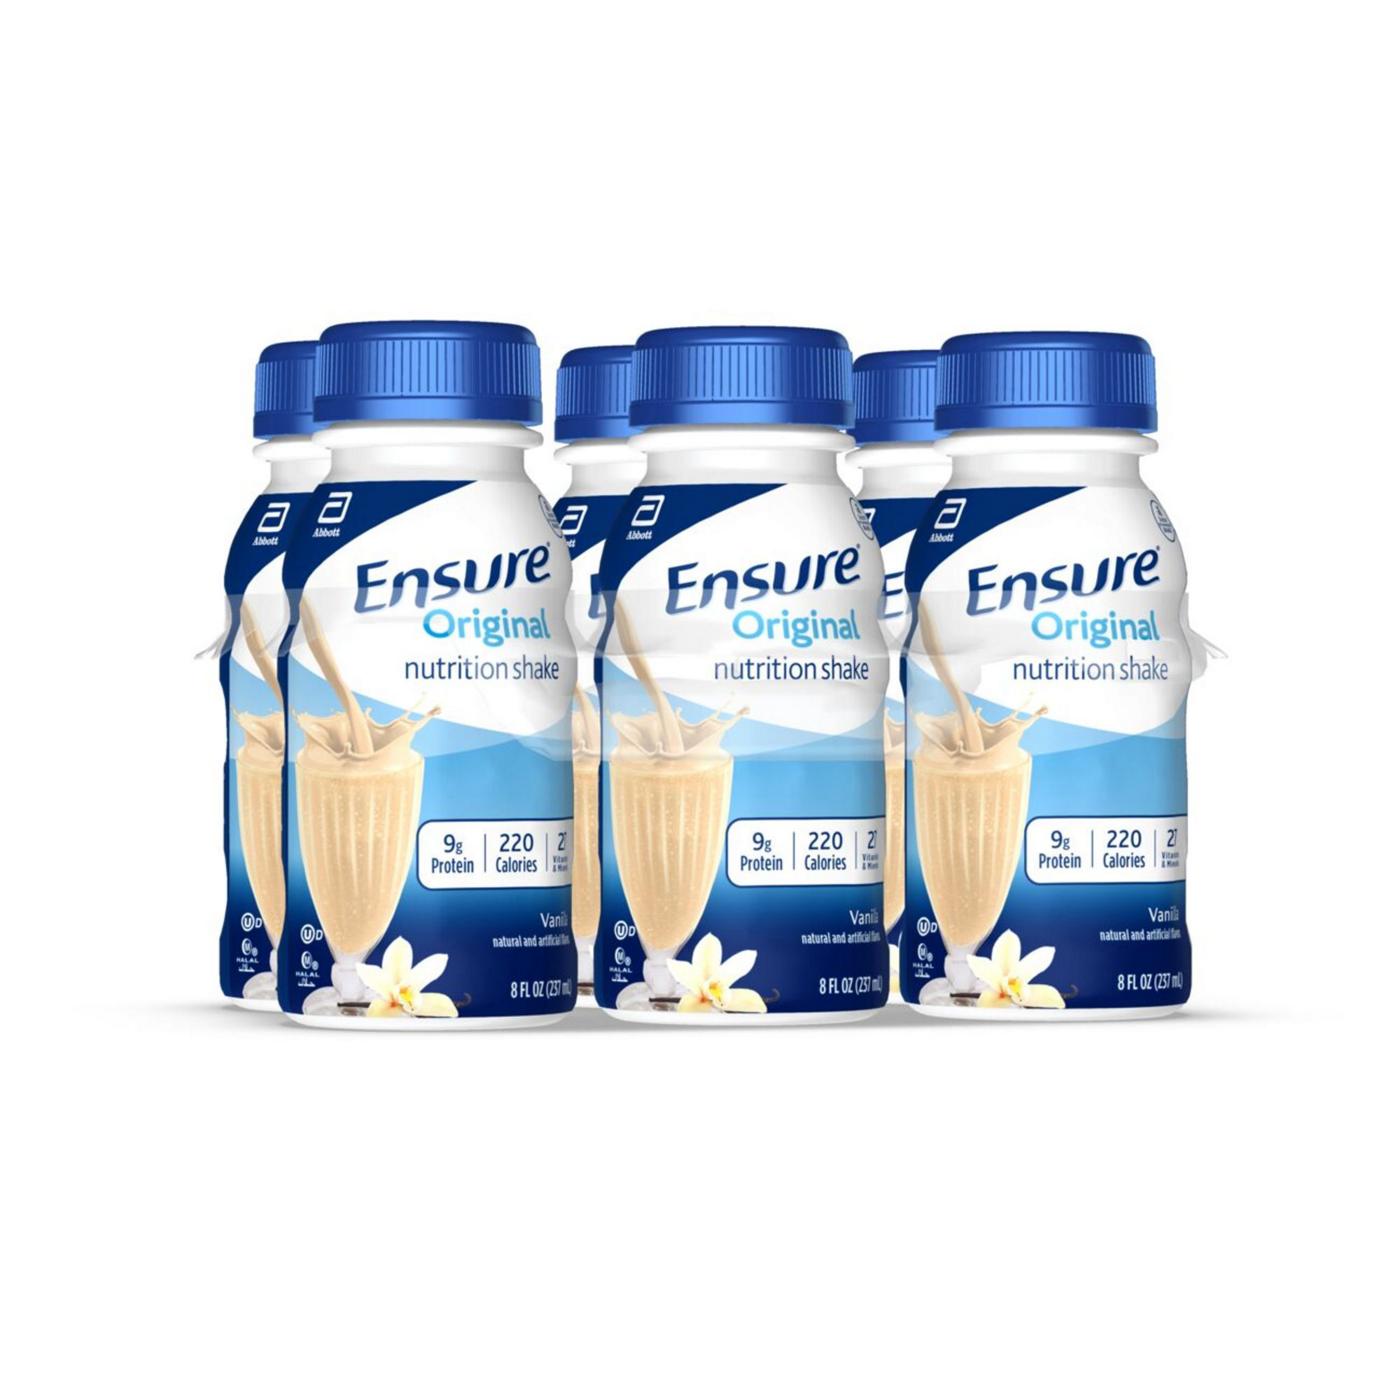 Ensure Original Nutrition Shake - Vanilla; image 8 of 10